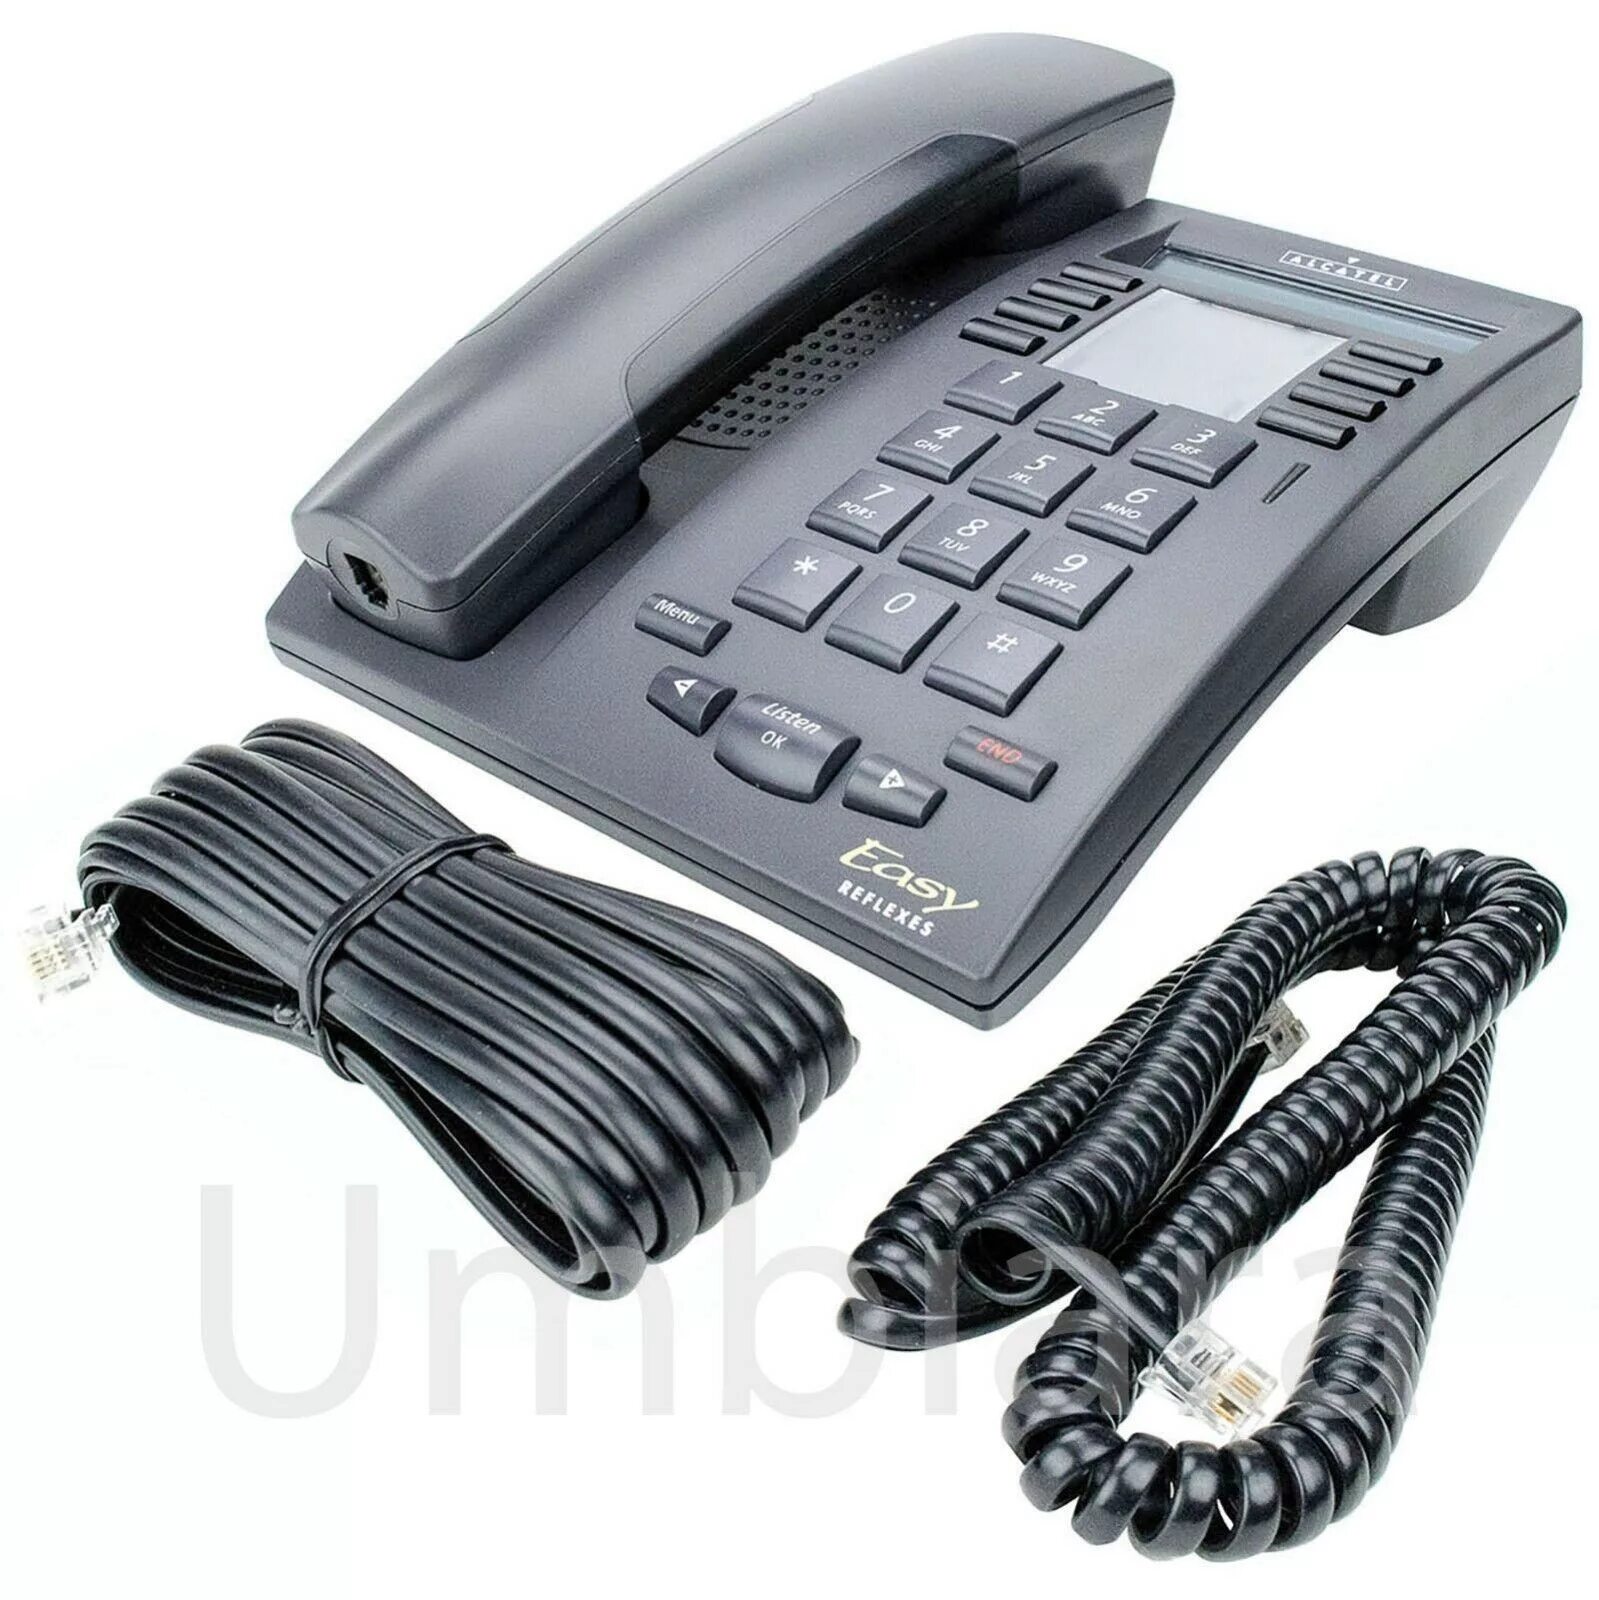 Телефон easy. Alcatel 4010 Phone. Цифровой телефонный аппарат Alcatel 4020. Alcatel 4010 easy Reflexes. Телефонный аппарат Alcatel 4010 Phone антрацит.